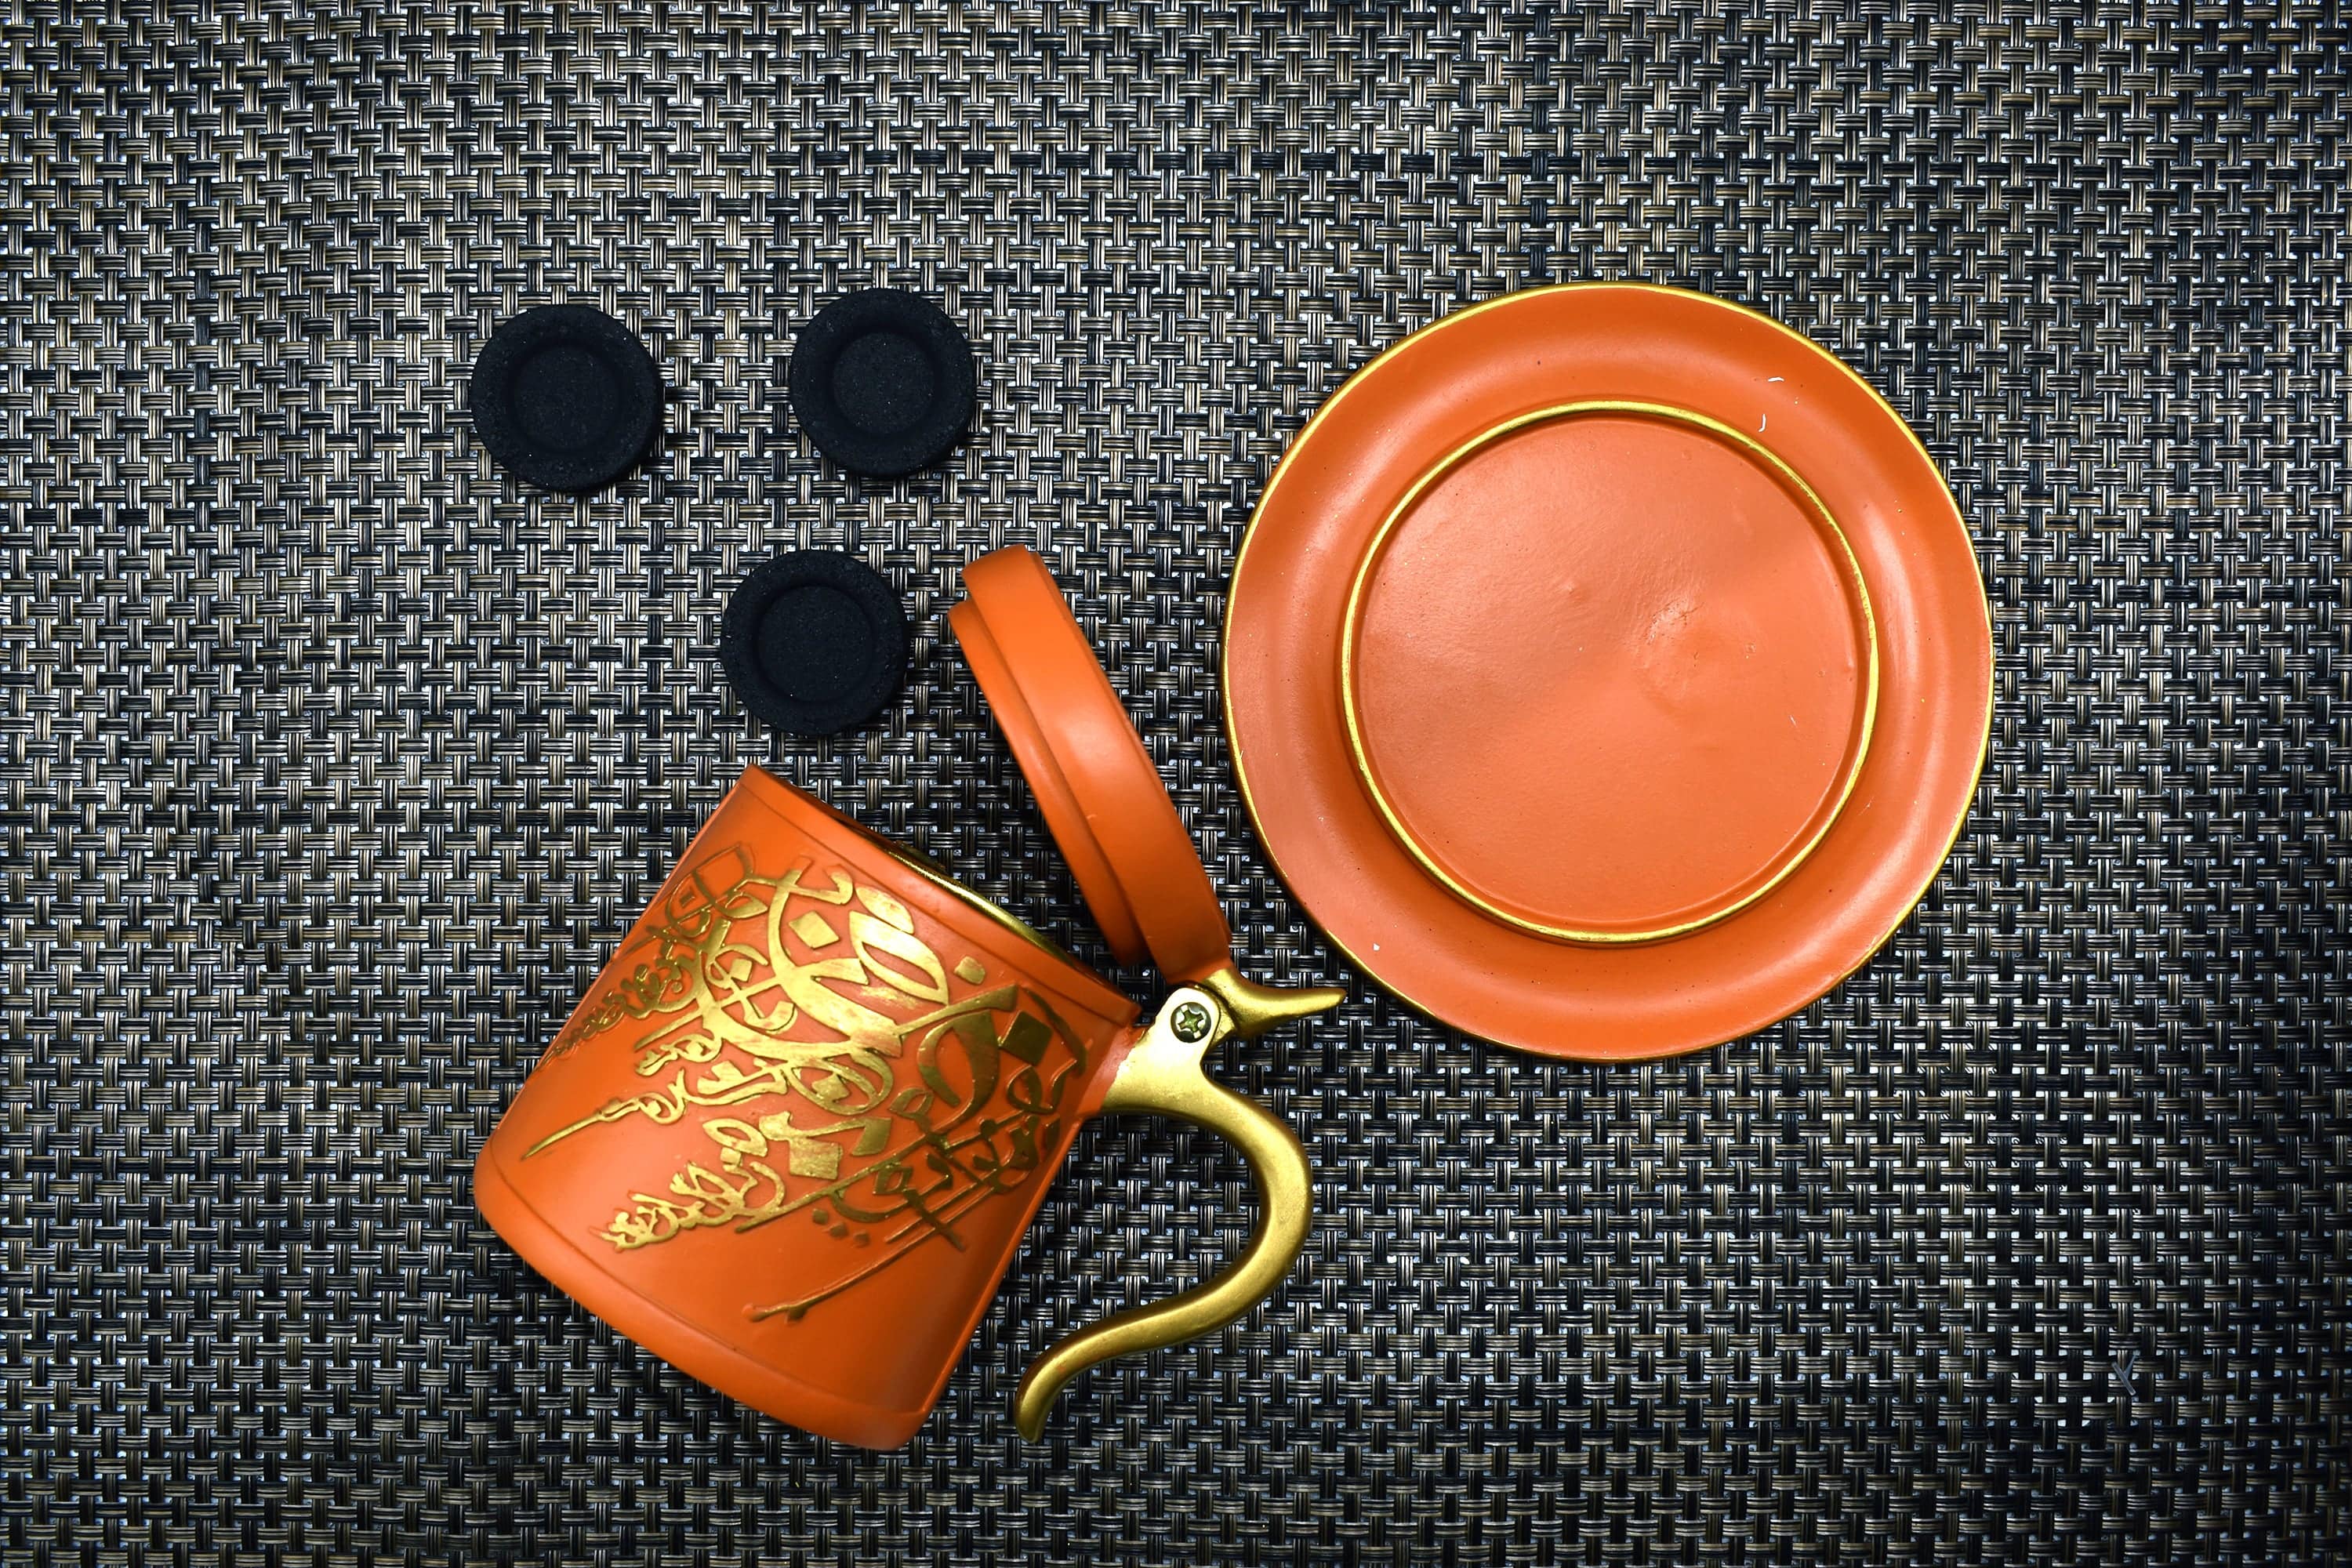 Tea Cup Style Closed Incense Bakhoor Burner - Orange - Intense oud